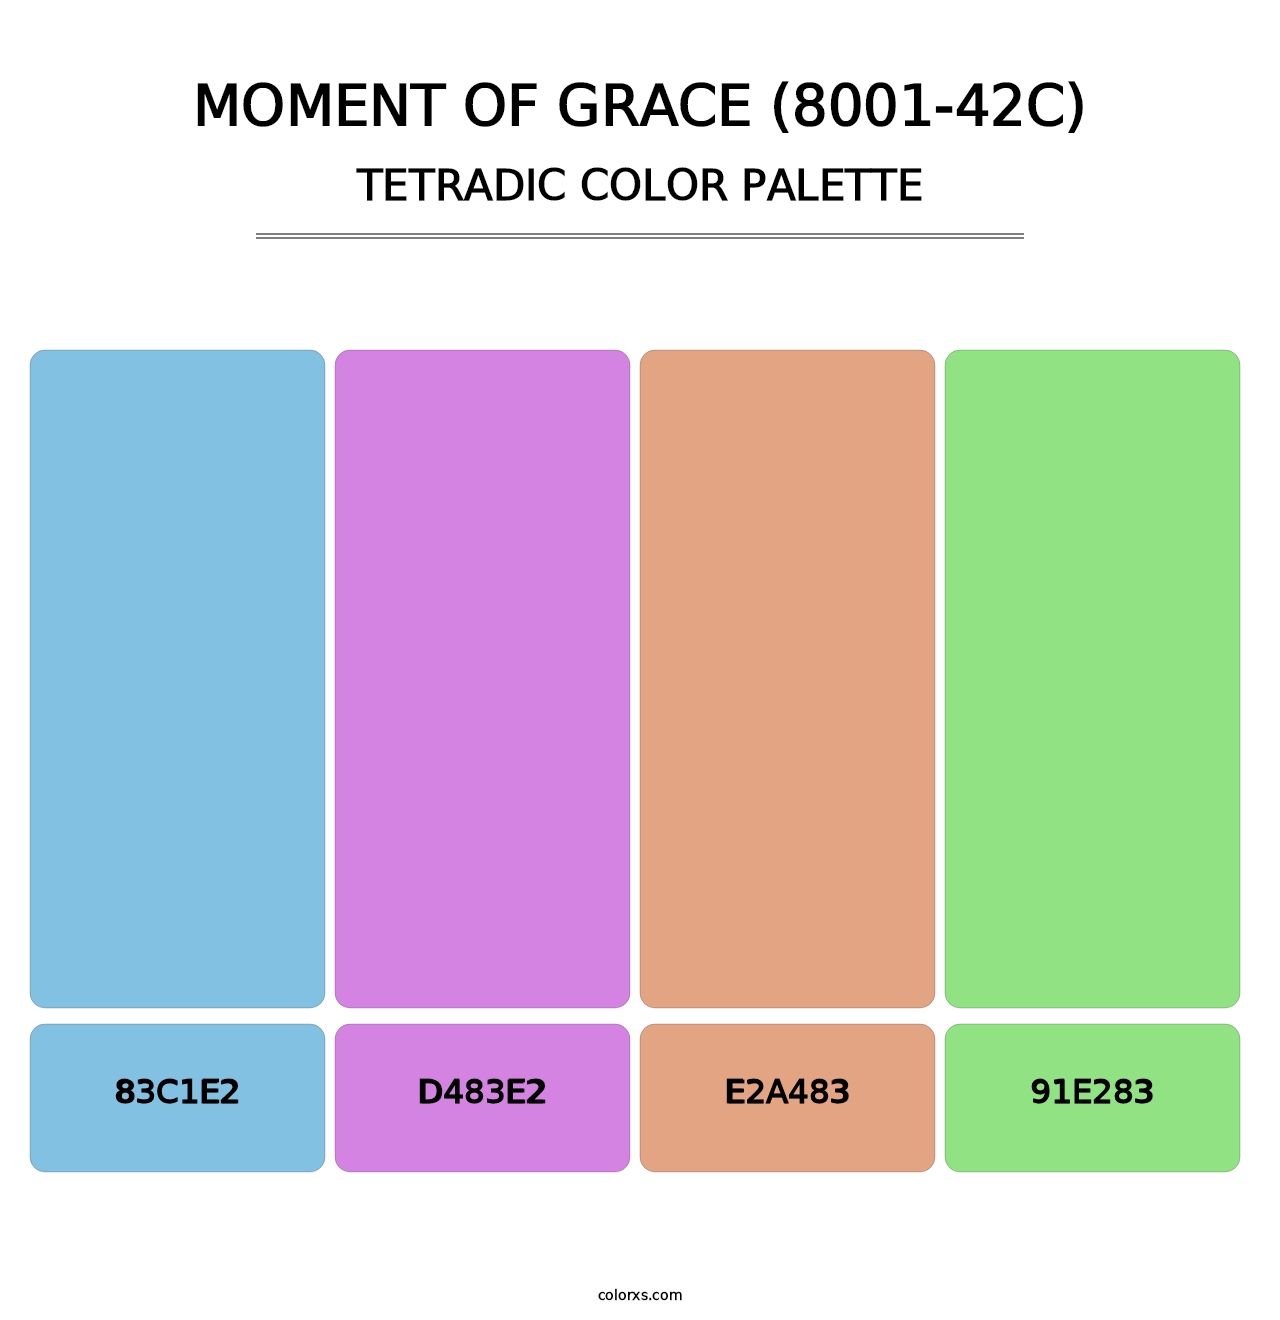 Moment of Grace (8001-42C) - Tetradic Color Palette